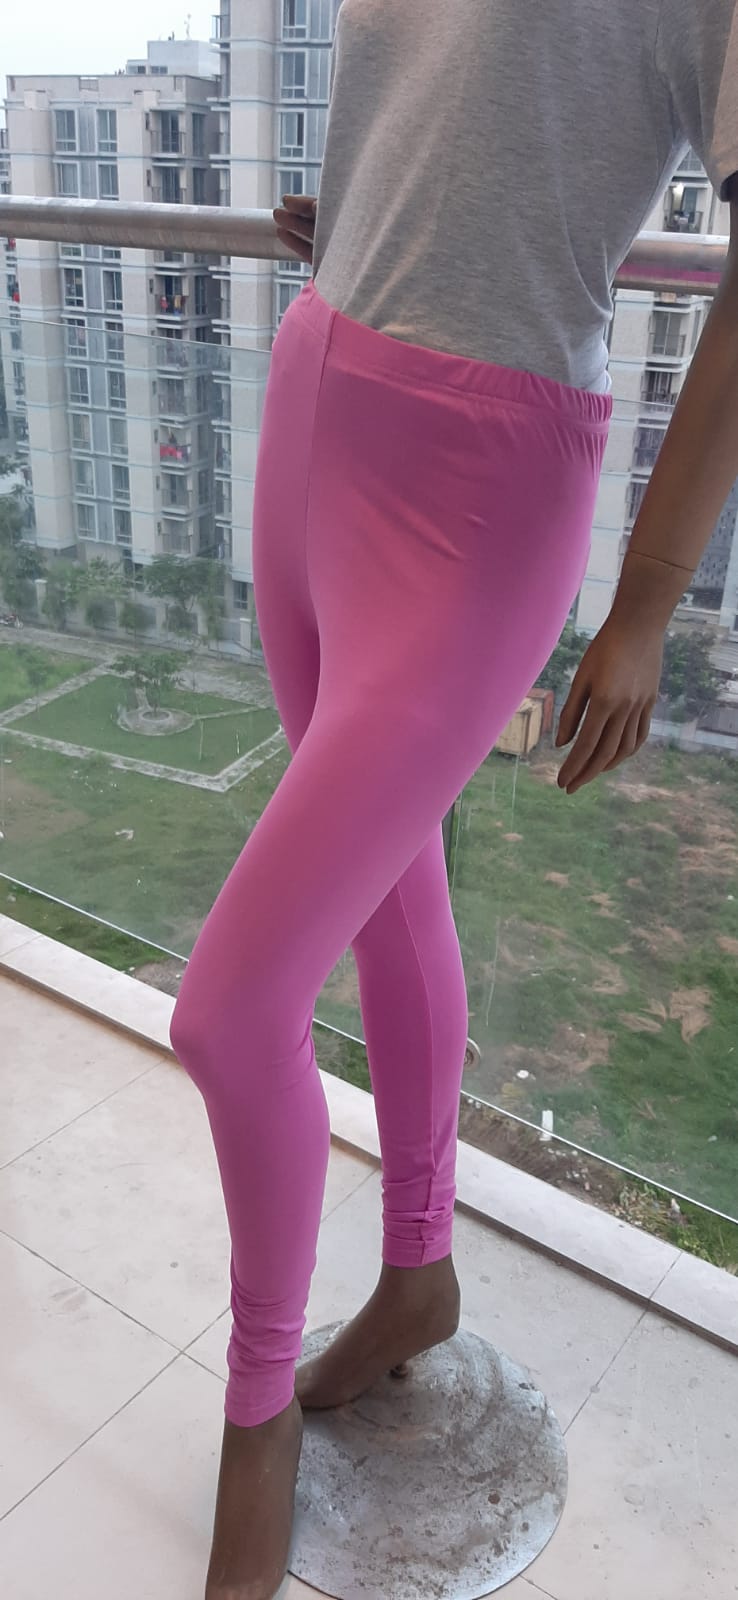 ROOOKU Uplift Squat Proof Workout Leggings for Women Anti-Ripped Scrun